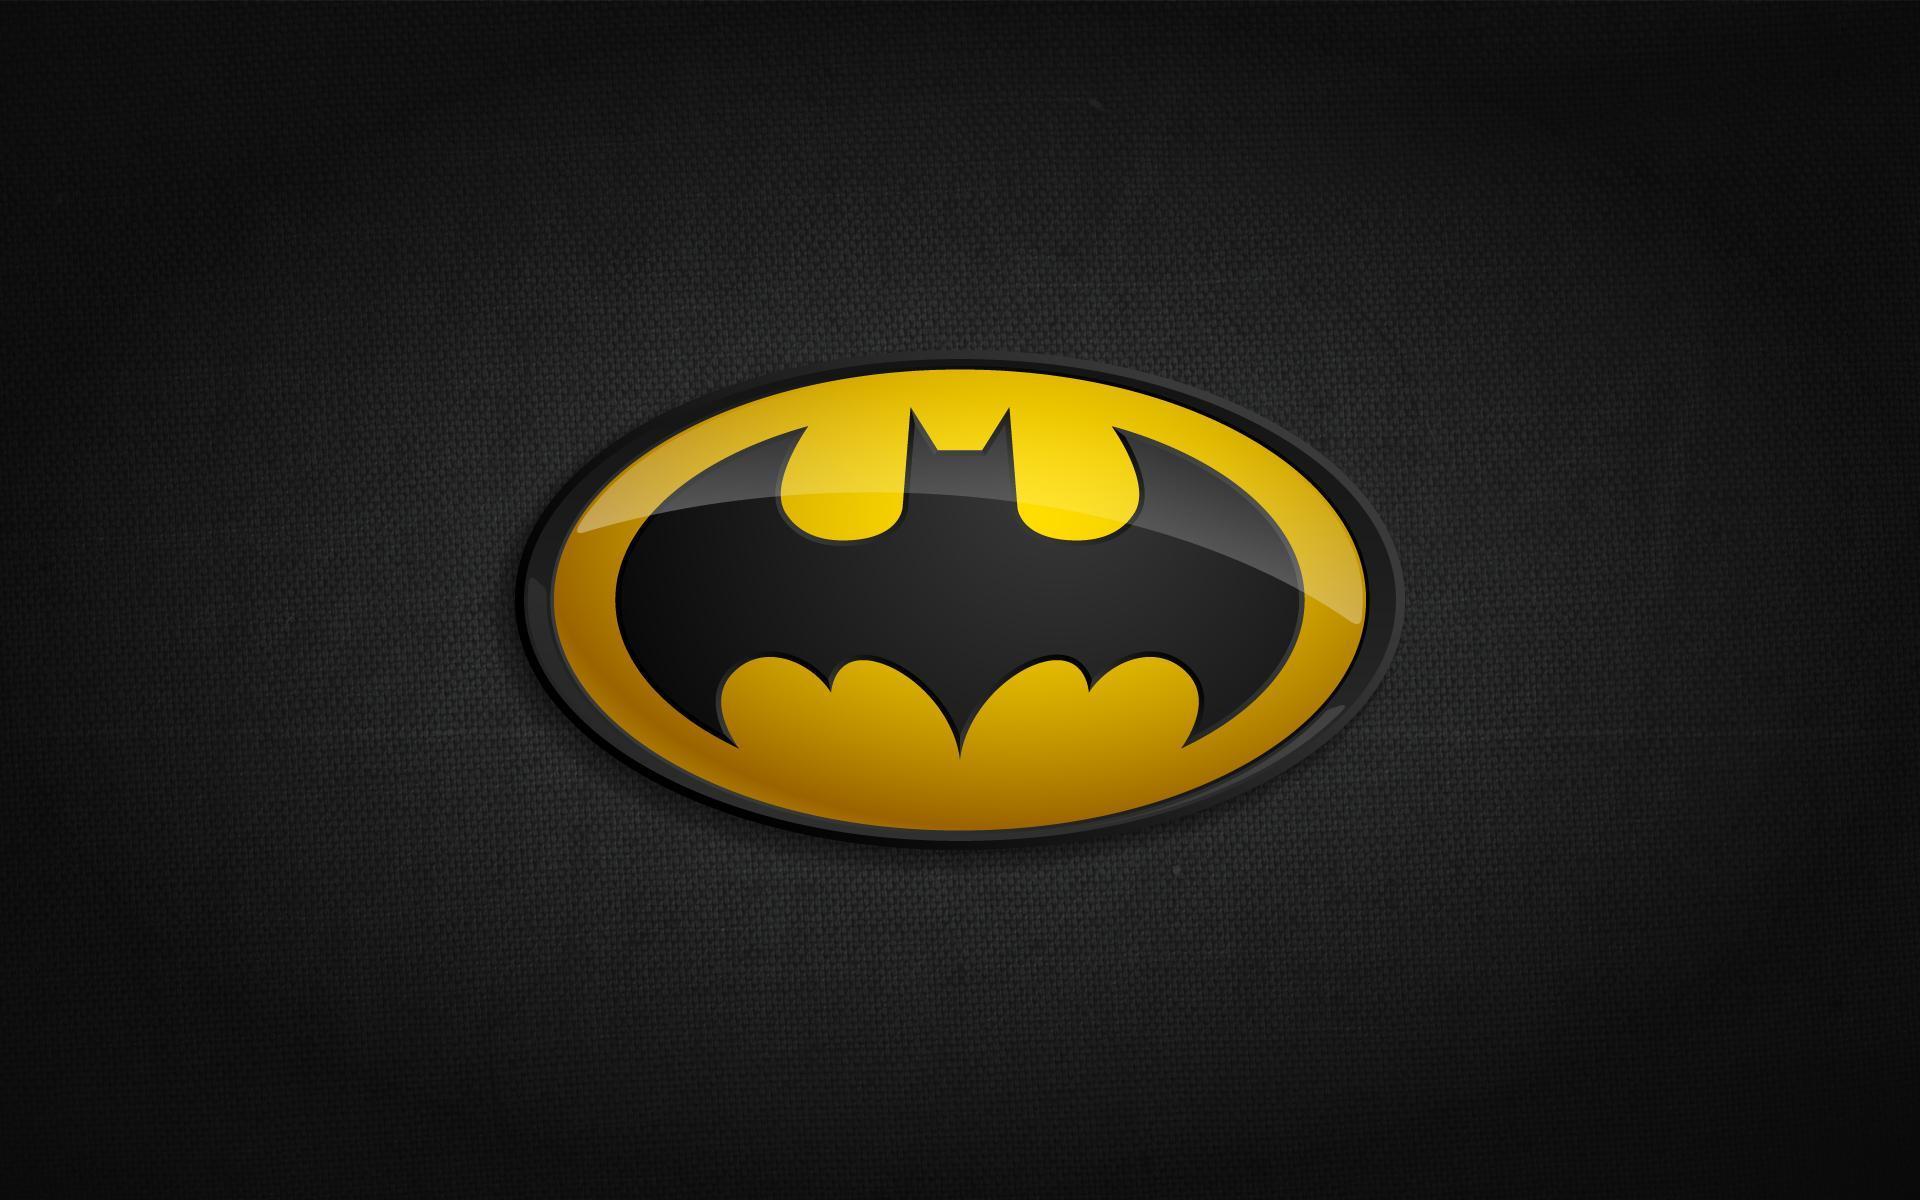 Cool Batman Logo Wallpaper, iPhone Wallpaper, Facebook Cover